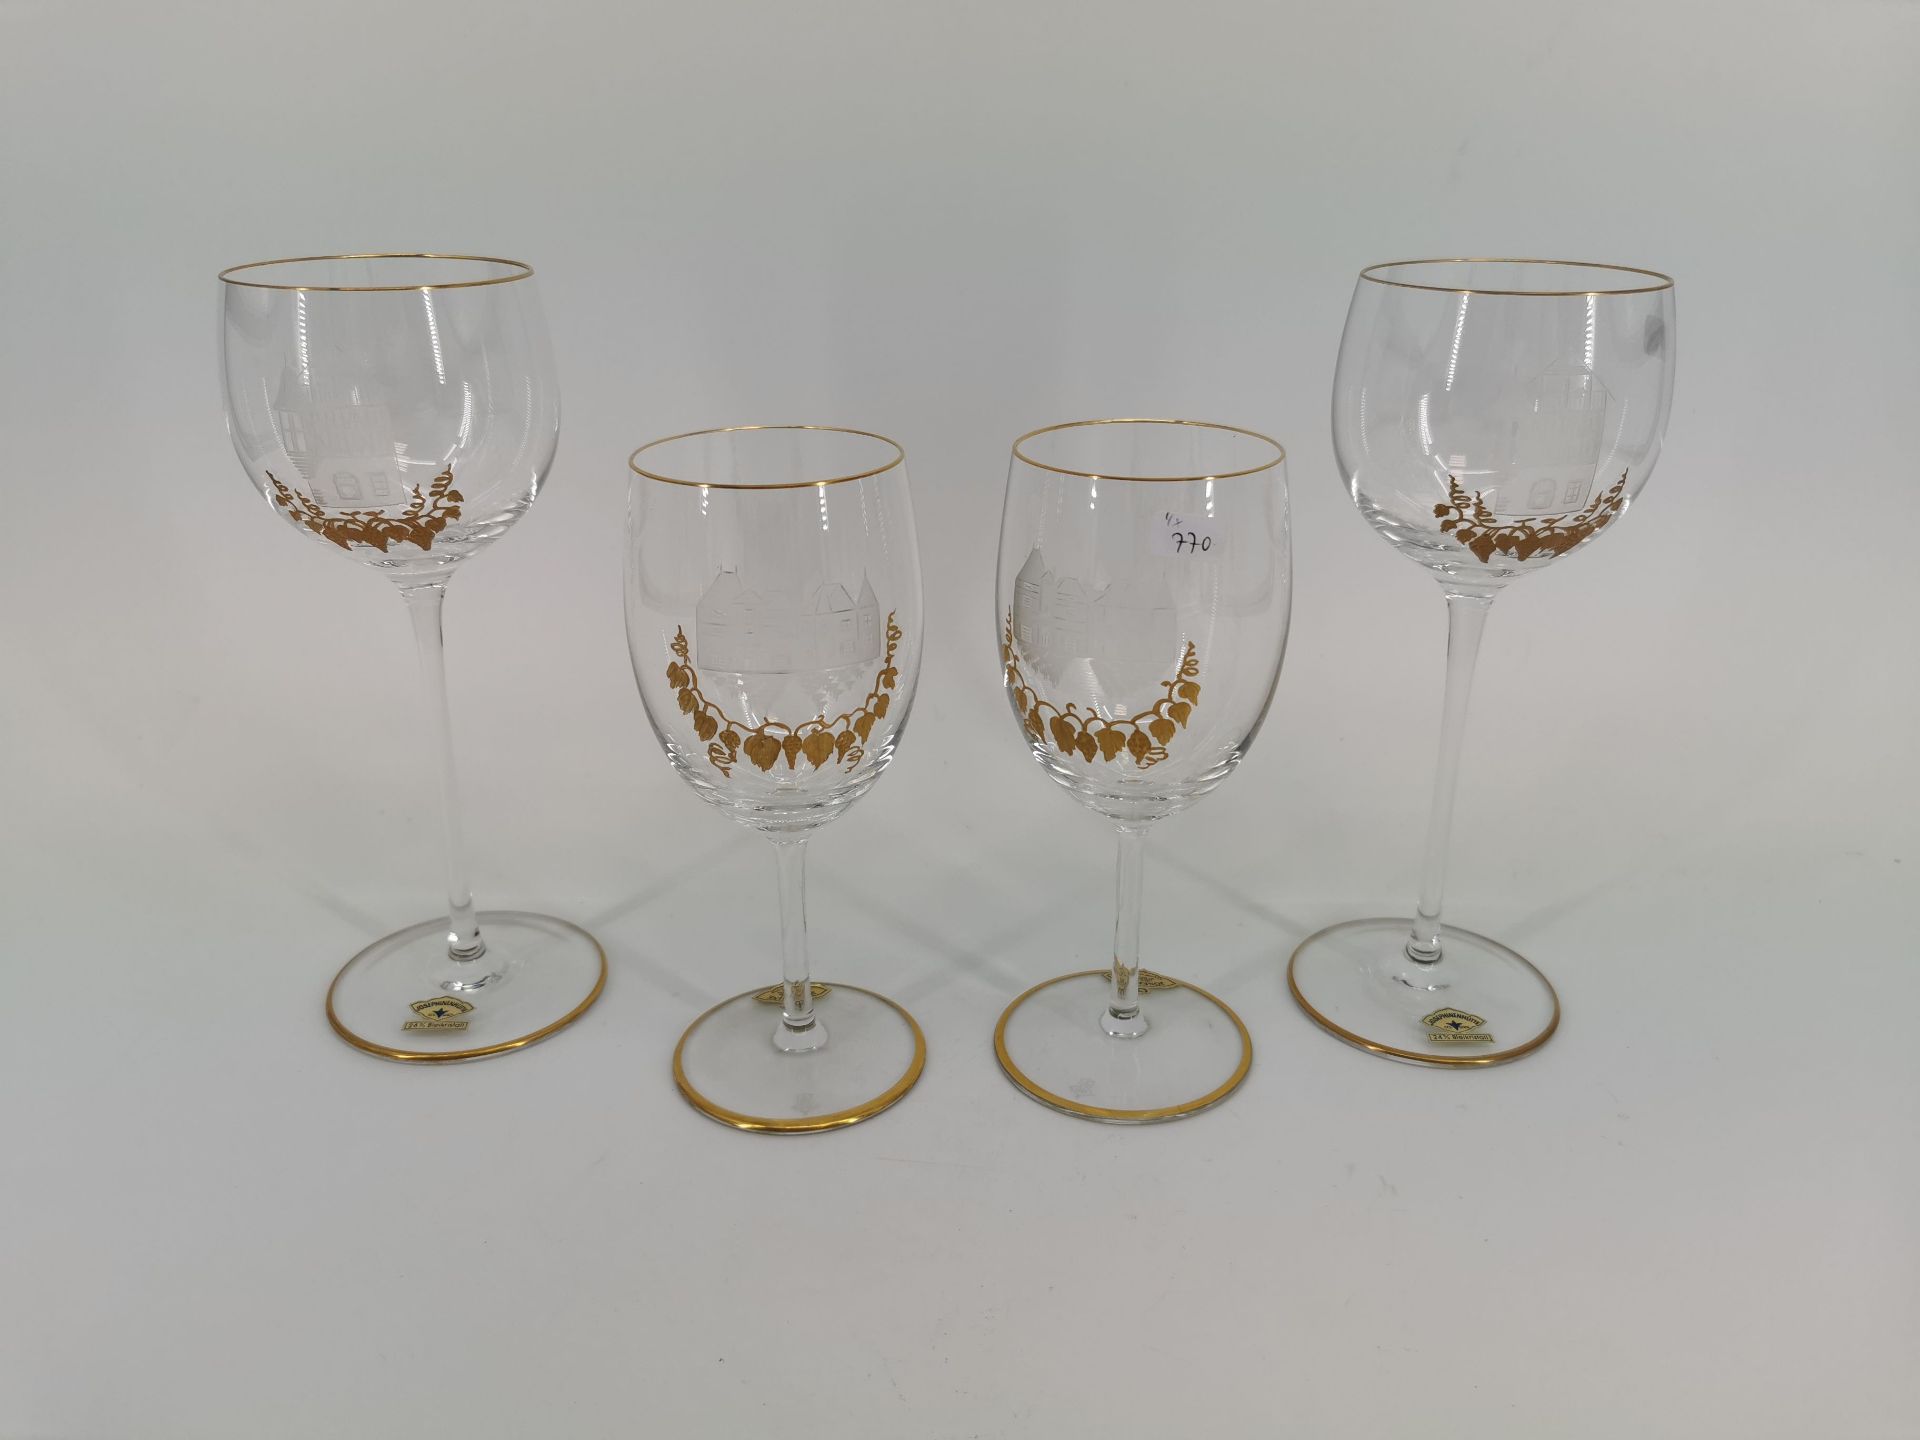 FOUR WINE GLASSES